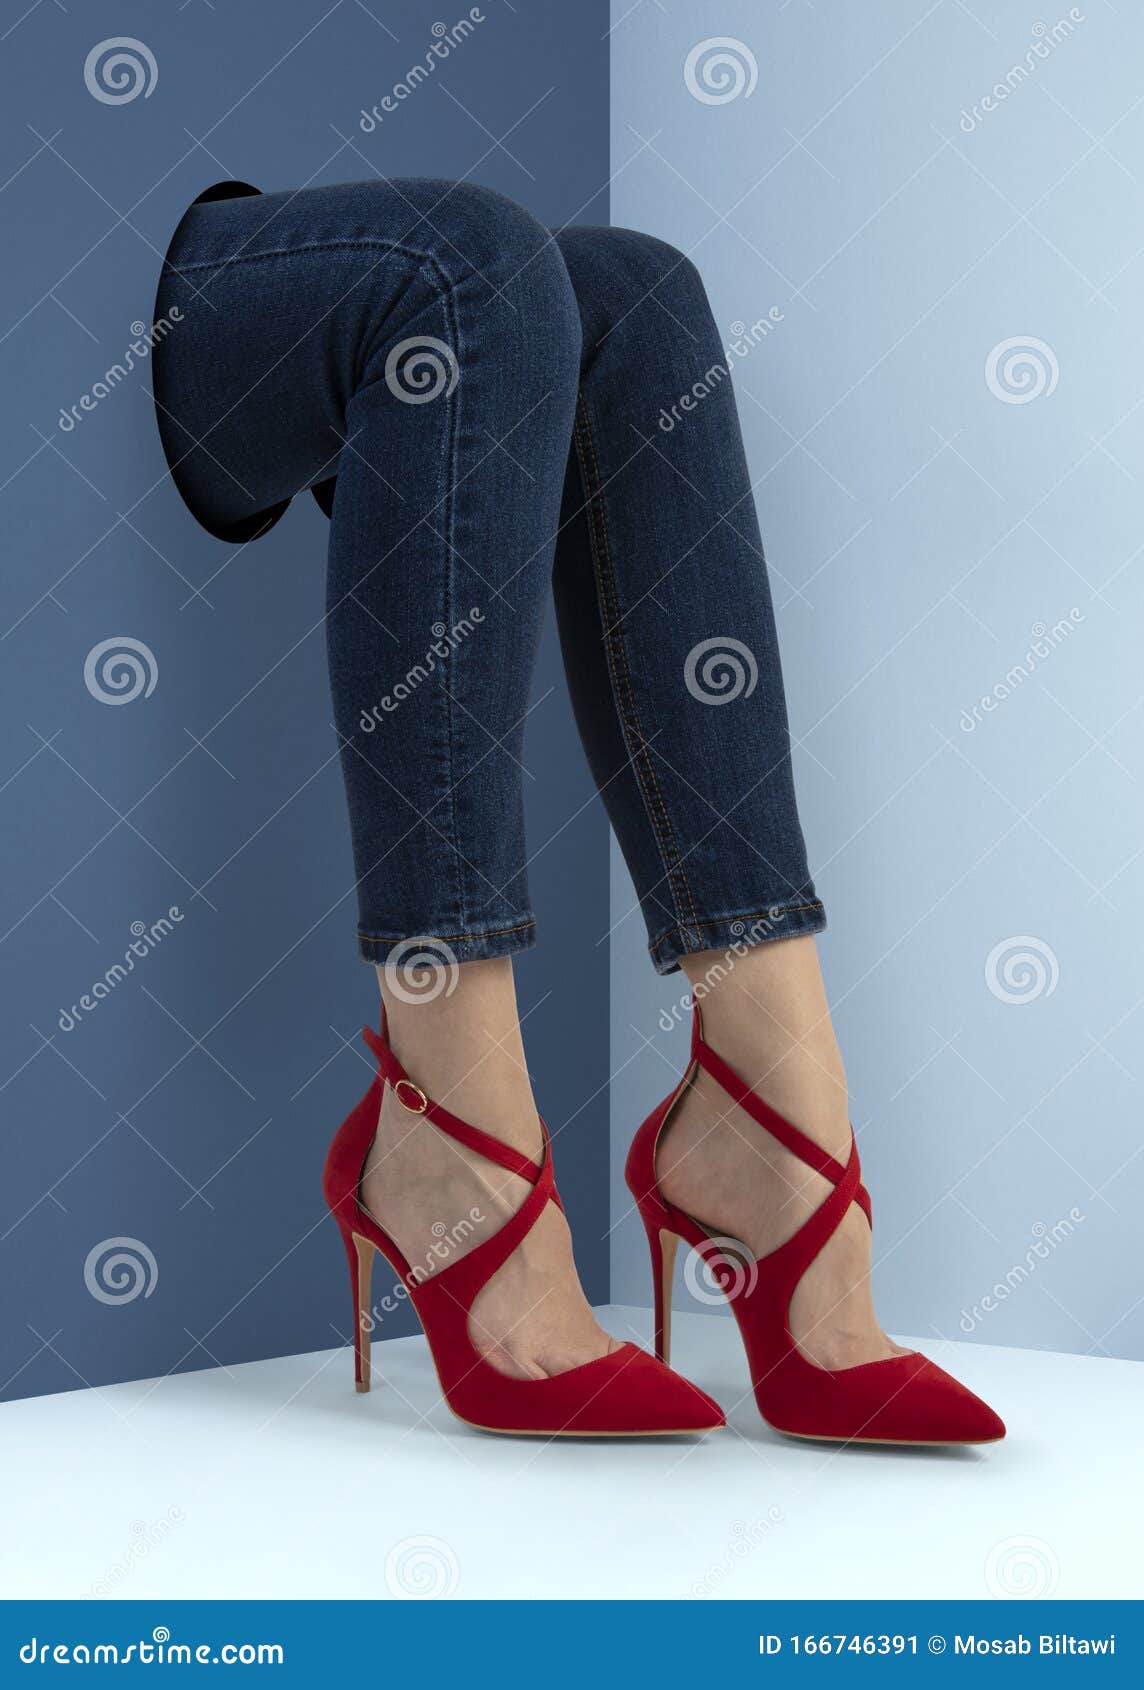 Legs Wearing Red High Heels Breaking through Pastel Blue Wall Creative ...